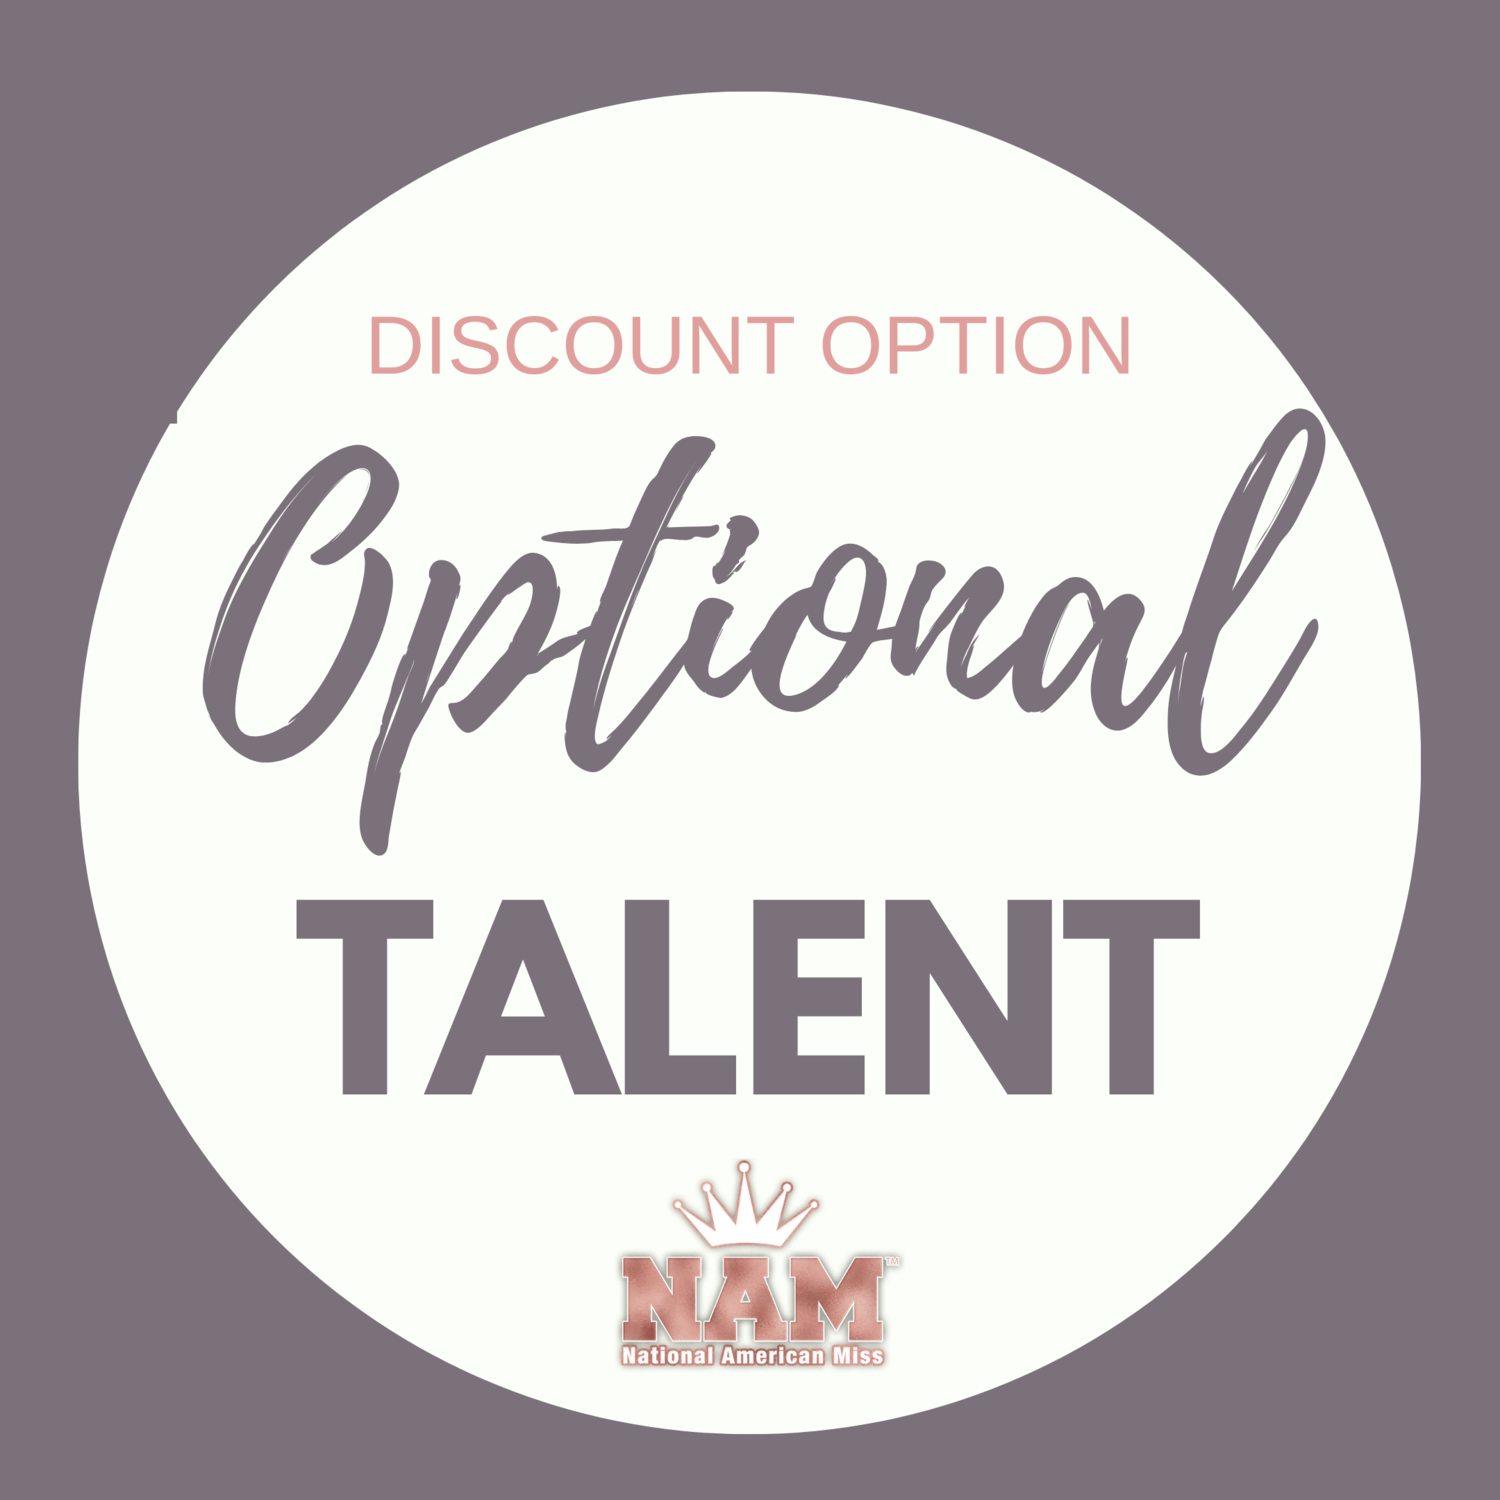 2022 Optional Talent Contest Discount